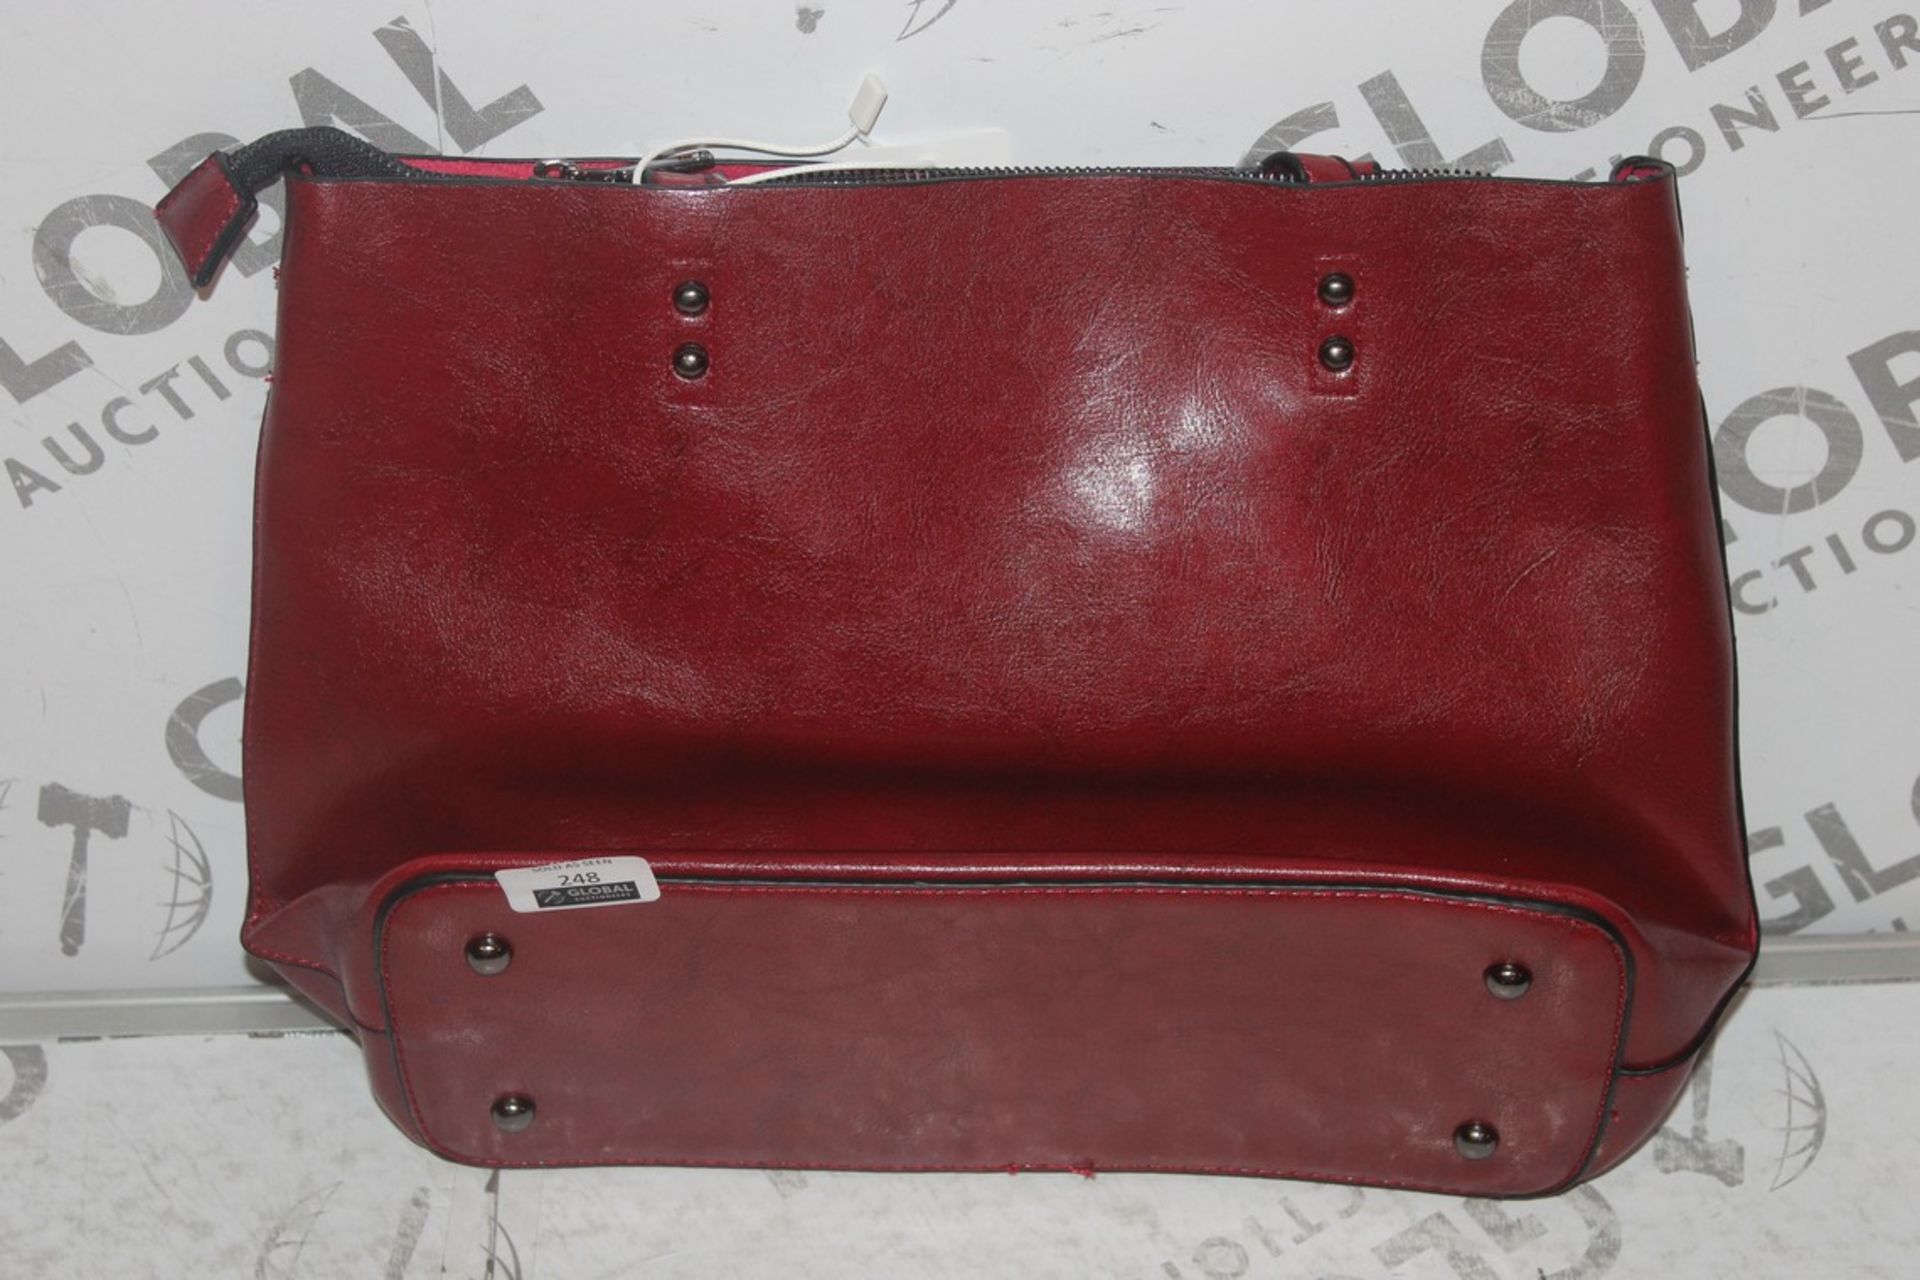 Brand New Women's Coolives Leather Dark Red Handbag RRP £44.99